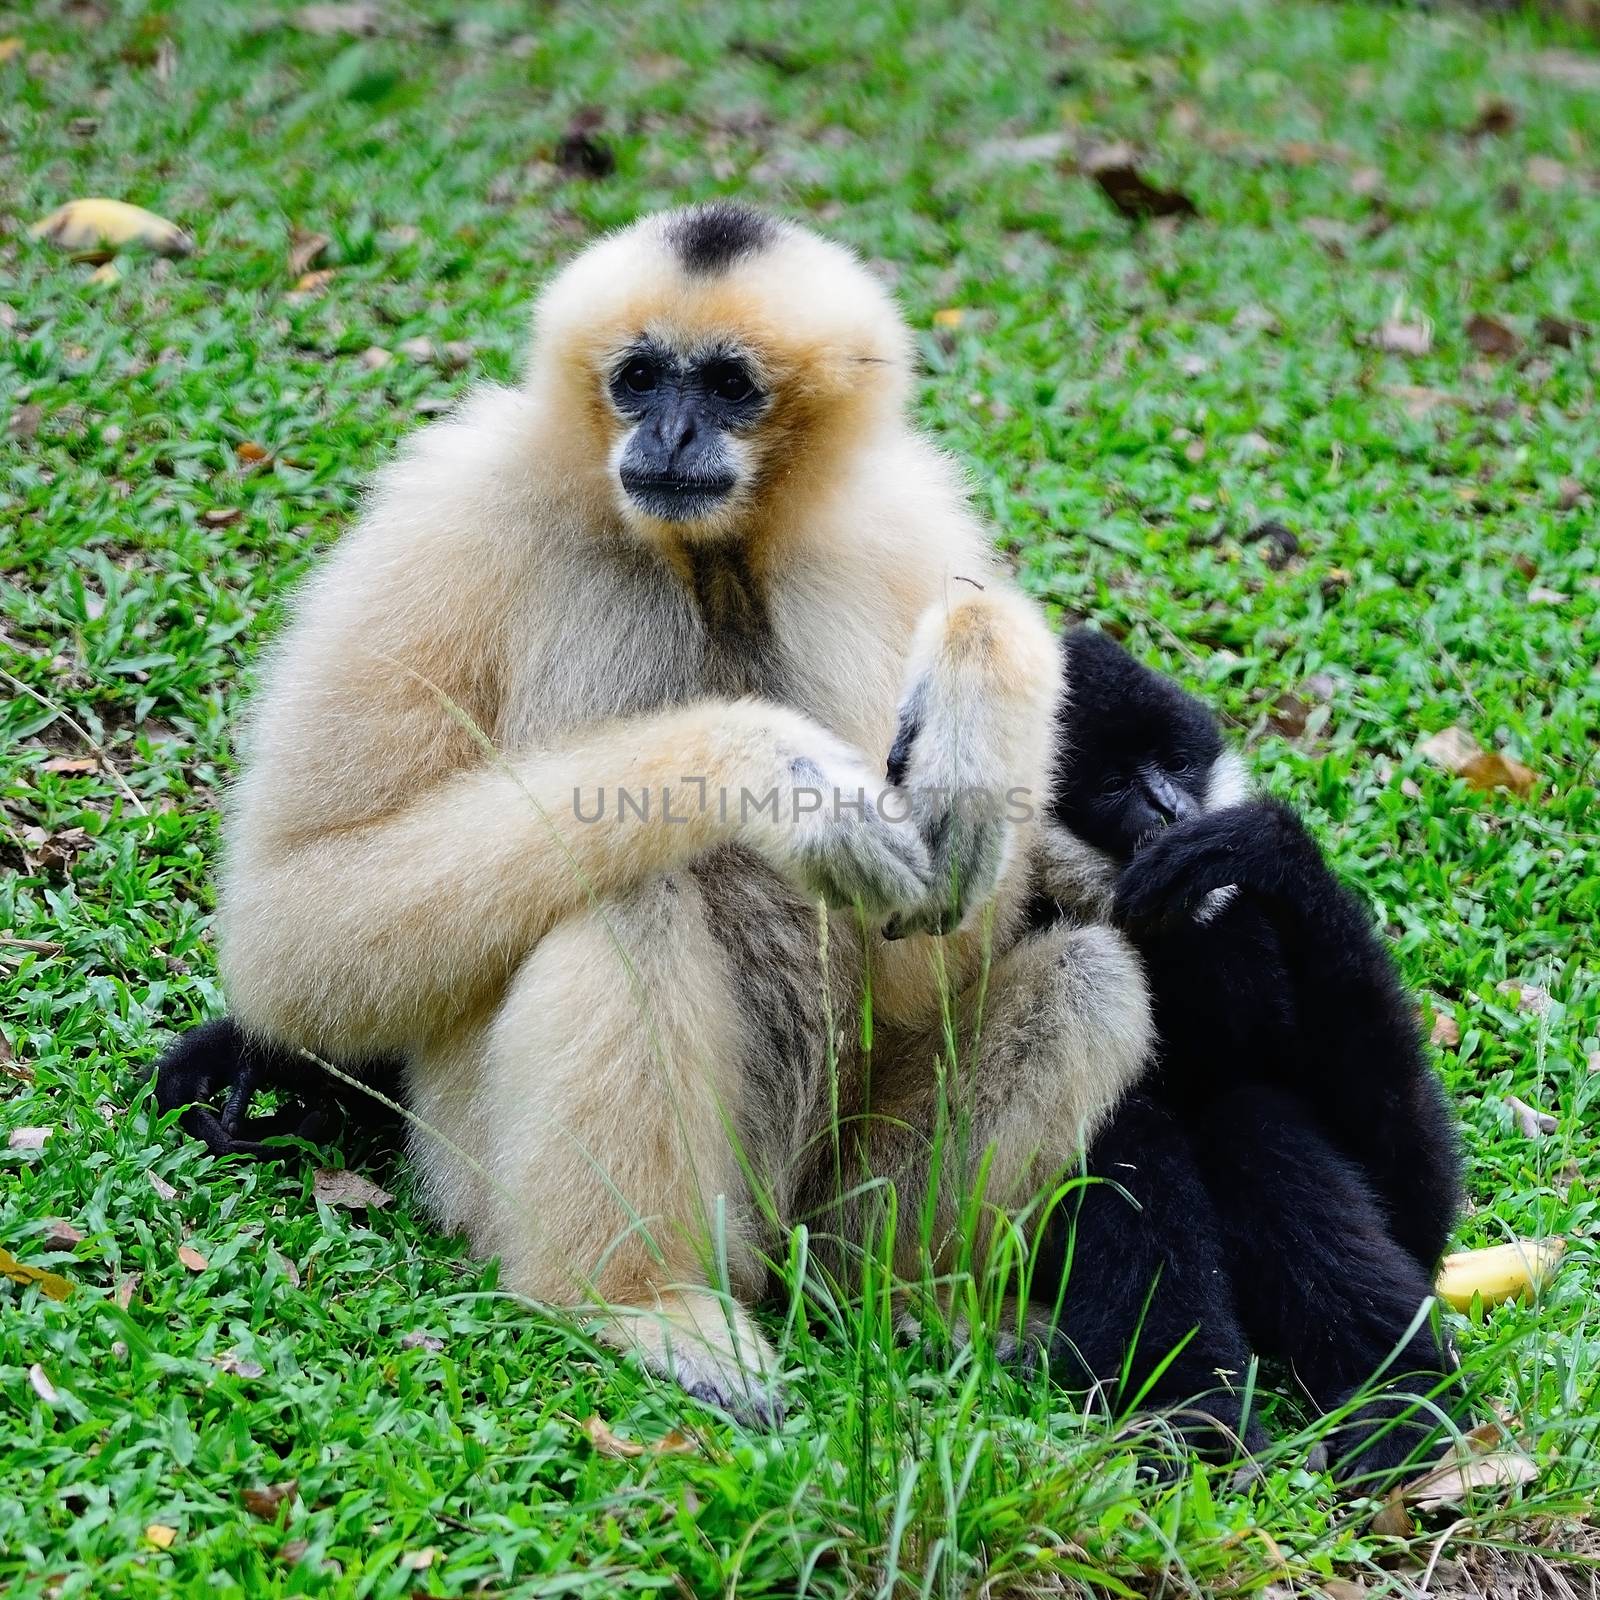 Family of Gibbon, White-cheeked Gibbon (Namascus leucogenys), sitting on the ground